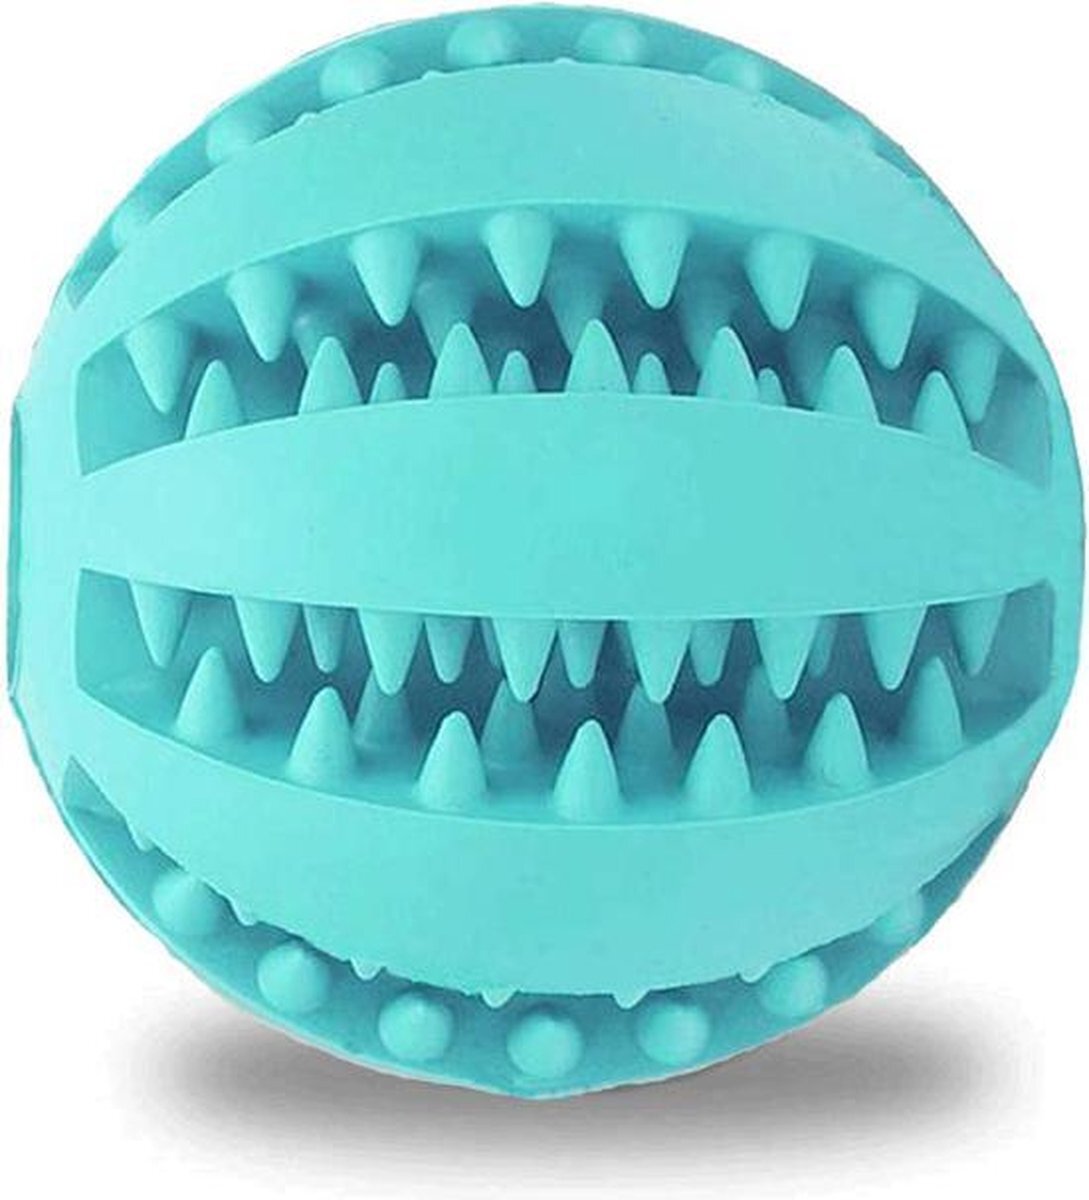 Paws n Claws Paws and Claws - MINTGROEN - Rubber Dental Massage bal - 6 cm doorsnee - hondenspeelgoed - tandplak voorkomend mint groen